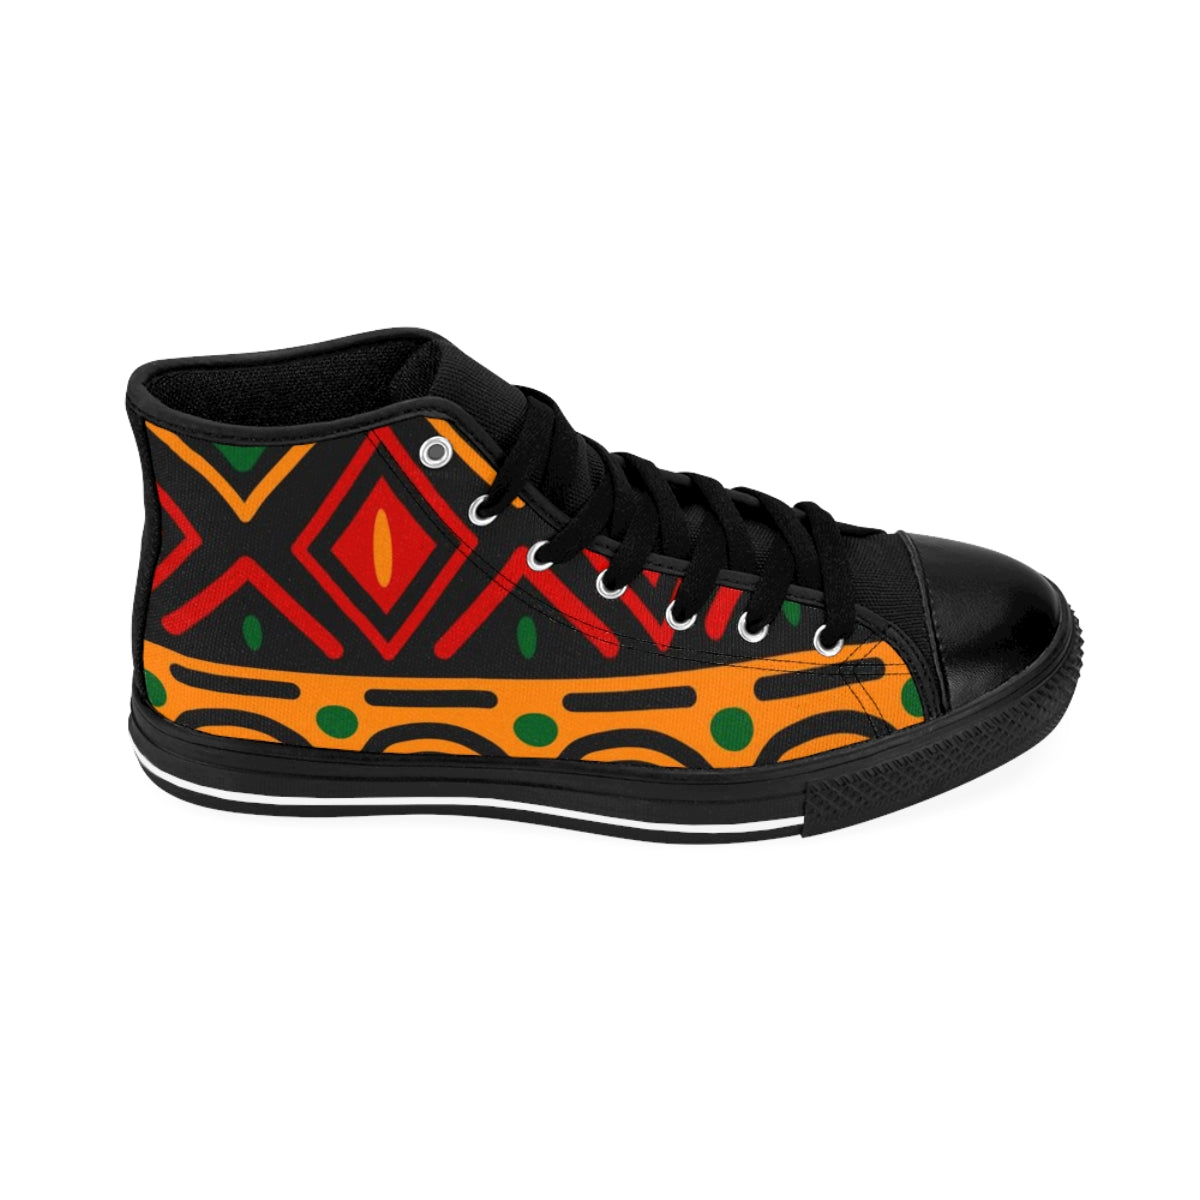 African Print Rasta Colors High Top Sneakers for Women